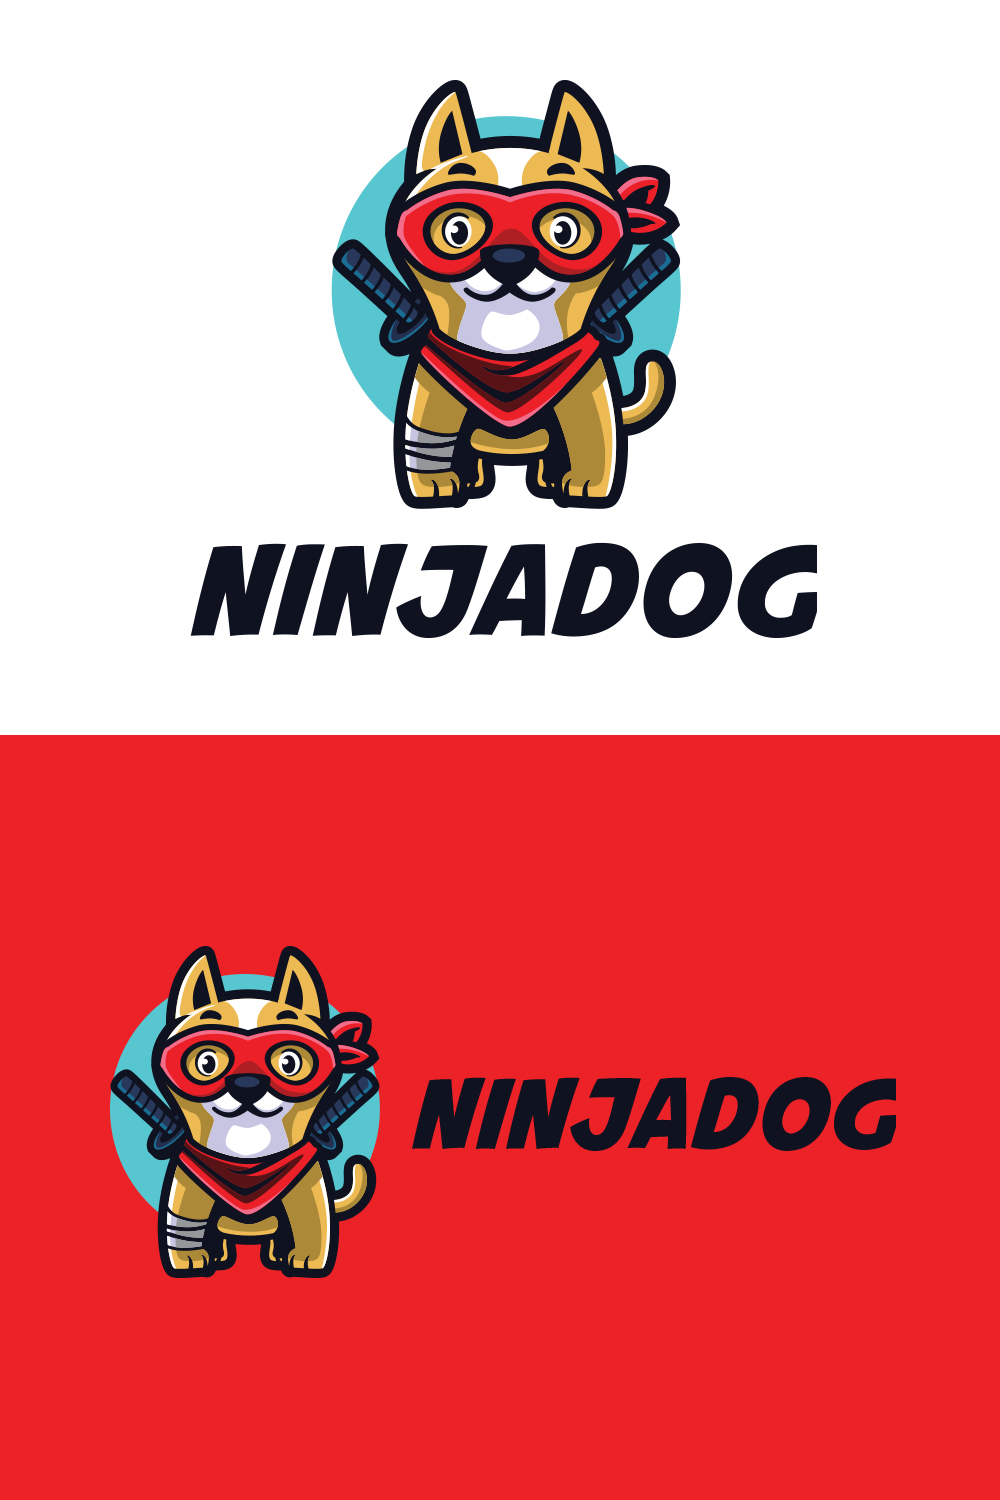 Ninja Dog Character Mascot Logo Design pinterest preview image.